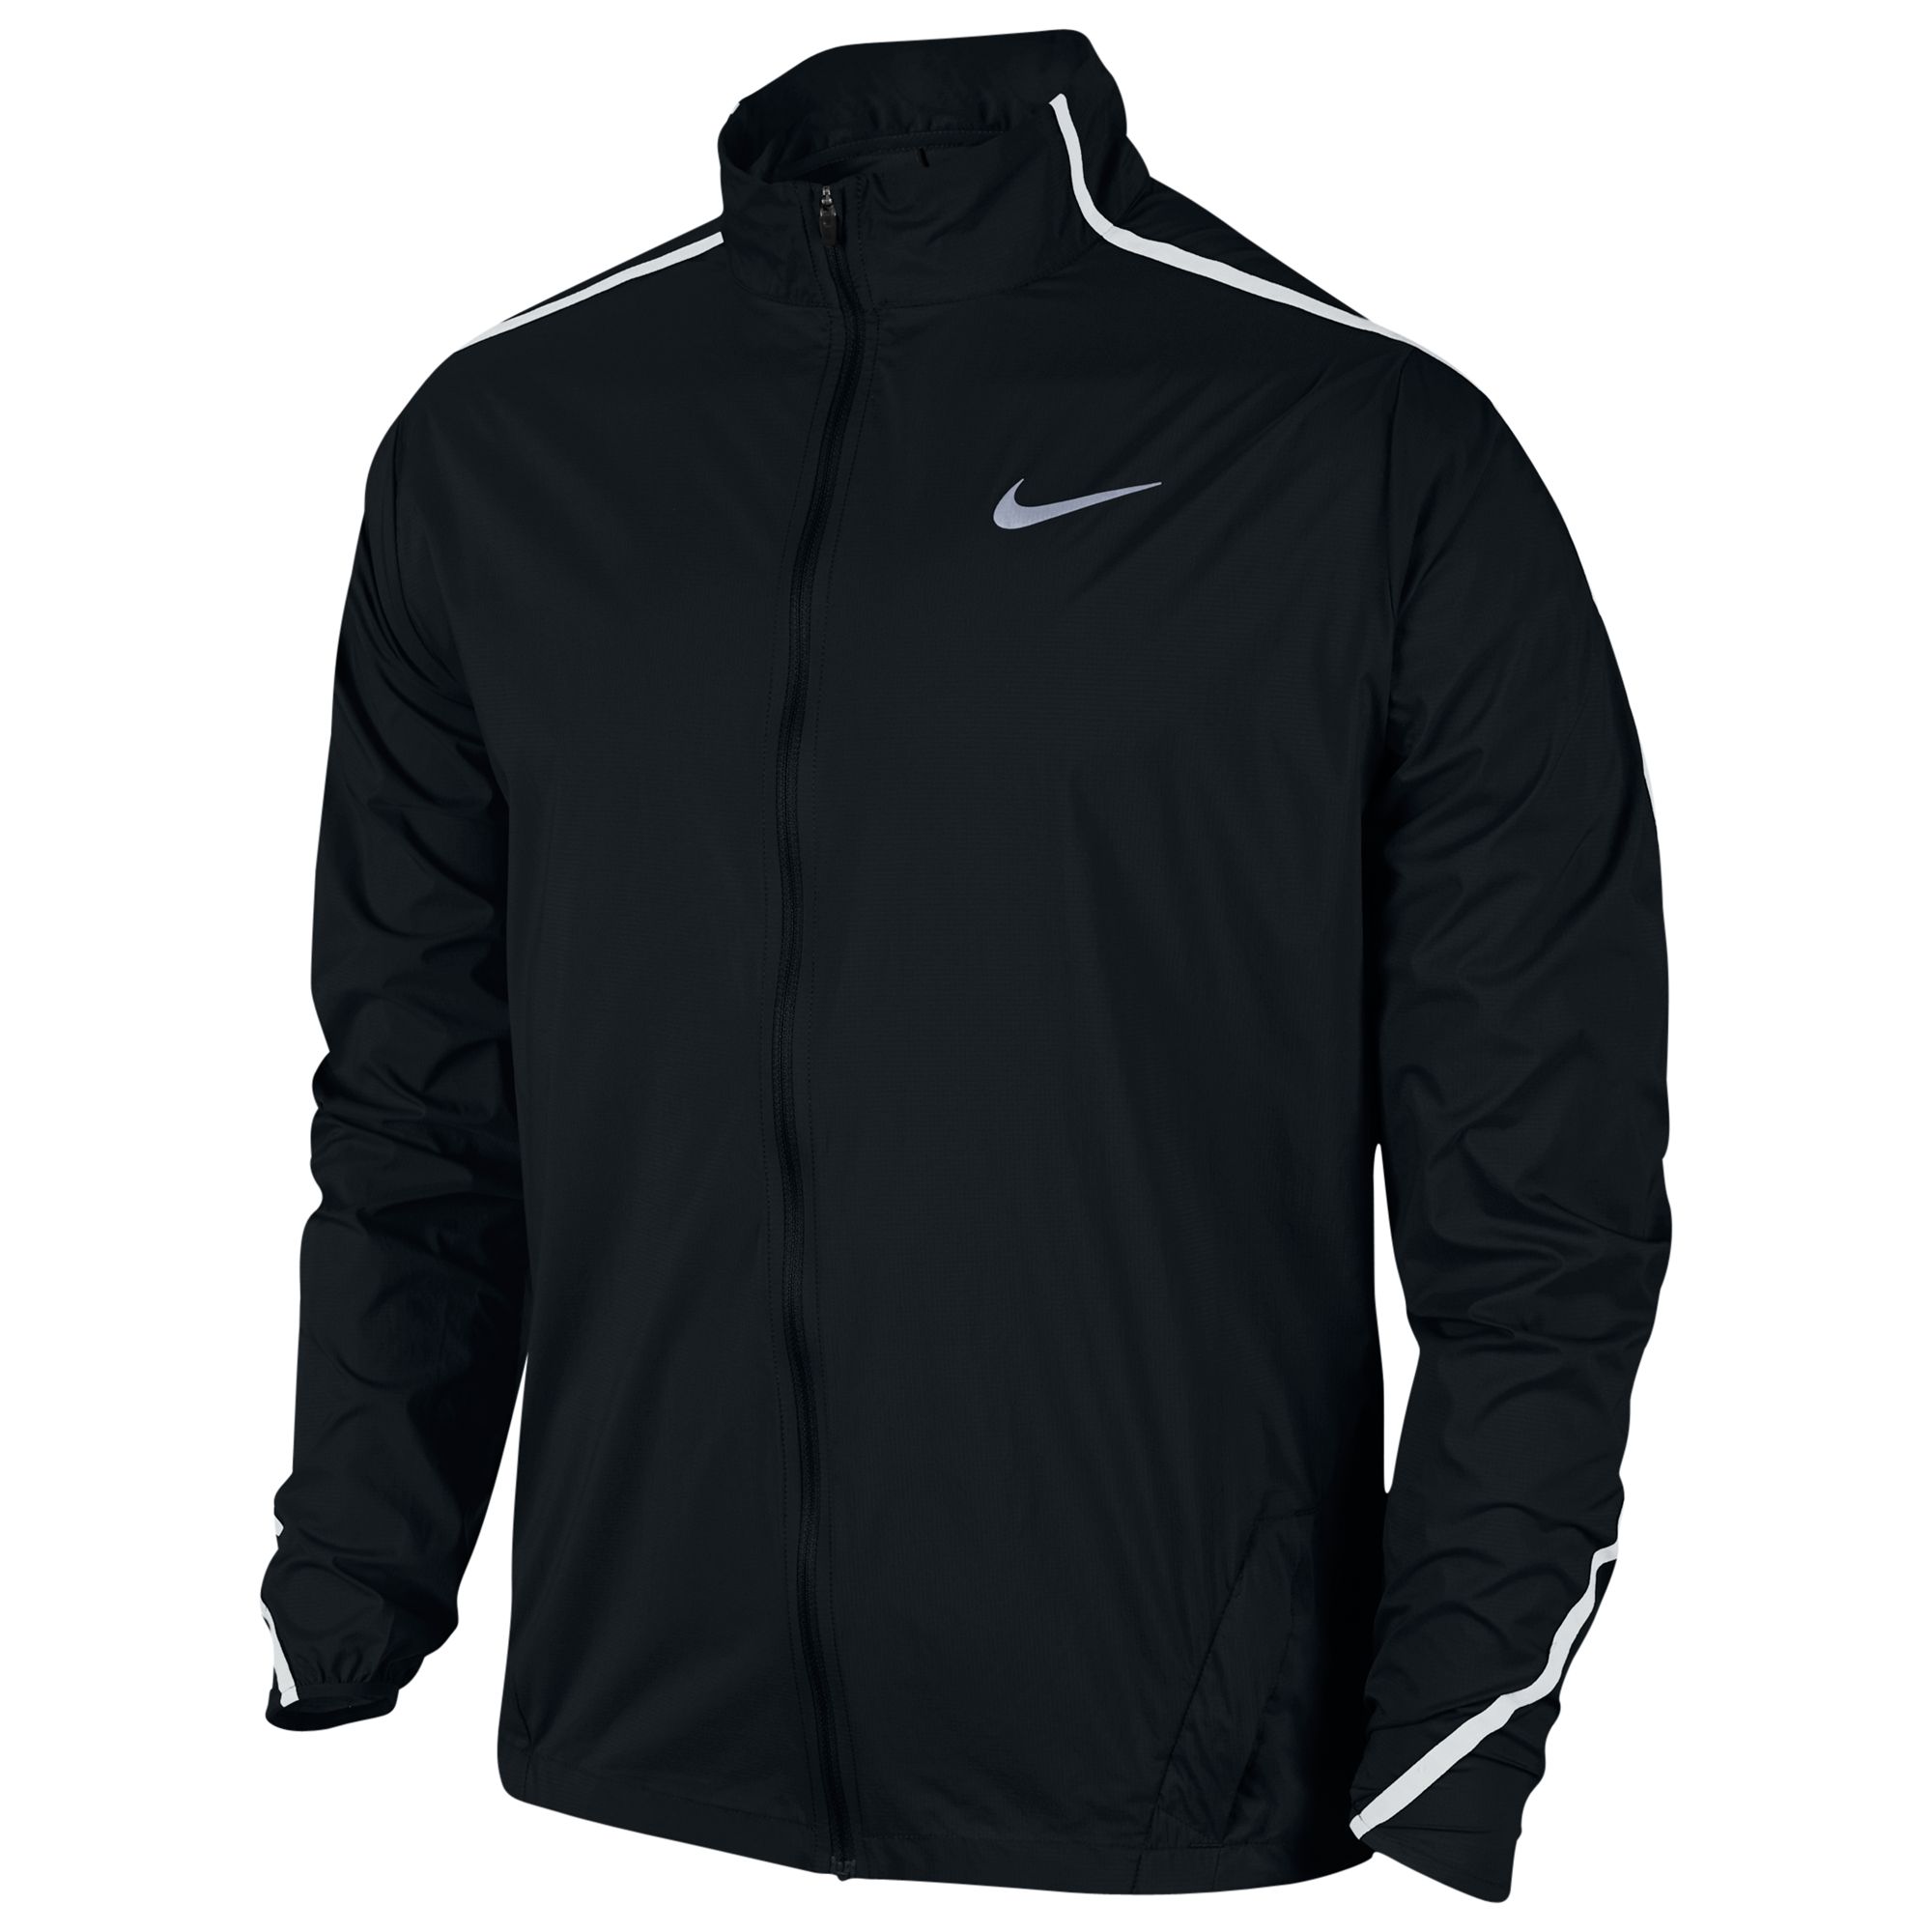 Nike Shield Impossibly Light Running Jacket, Black